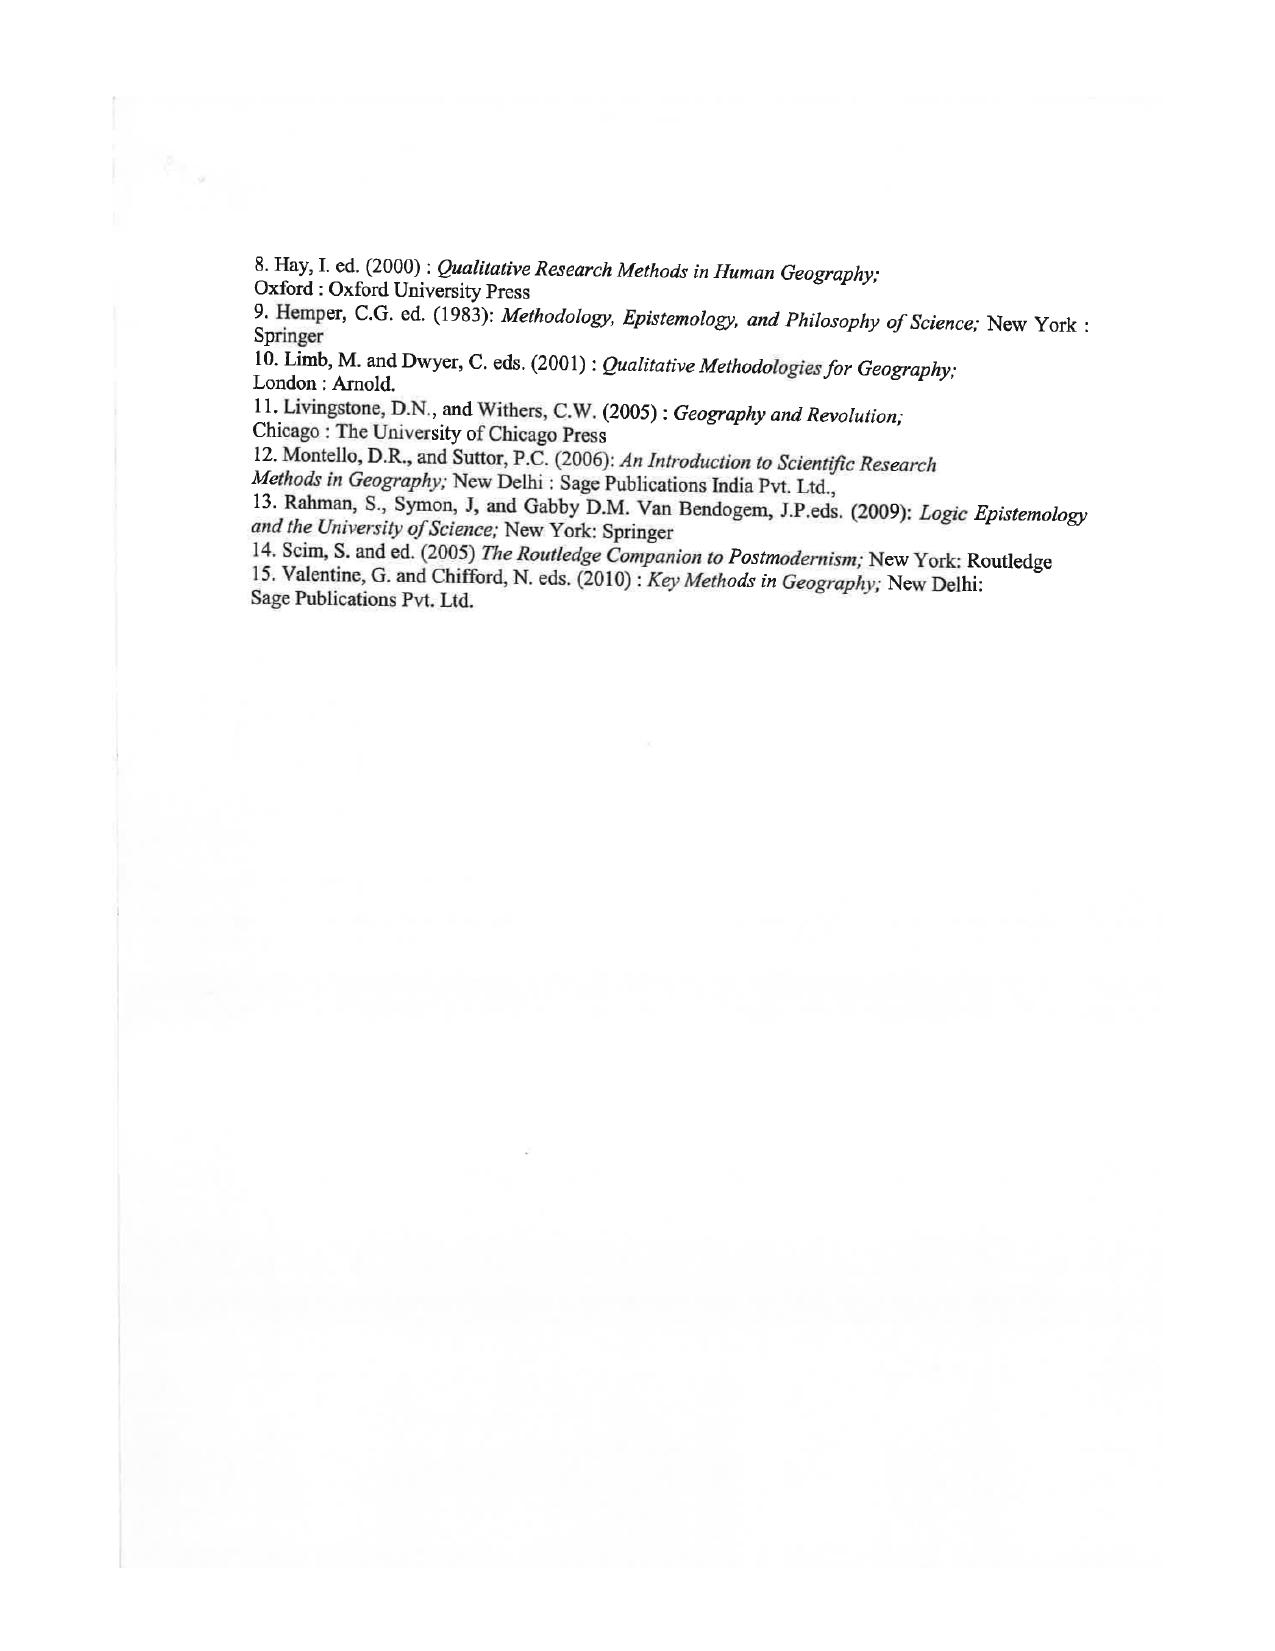 JMI Entrance Exam FACULTY OF NATURAL SCIENCES Syllabus - Page 30